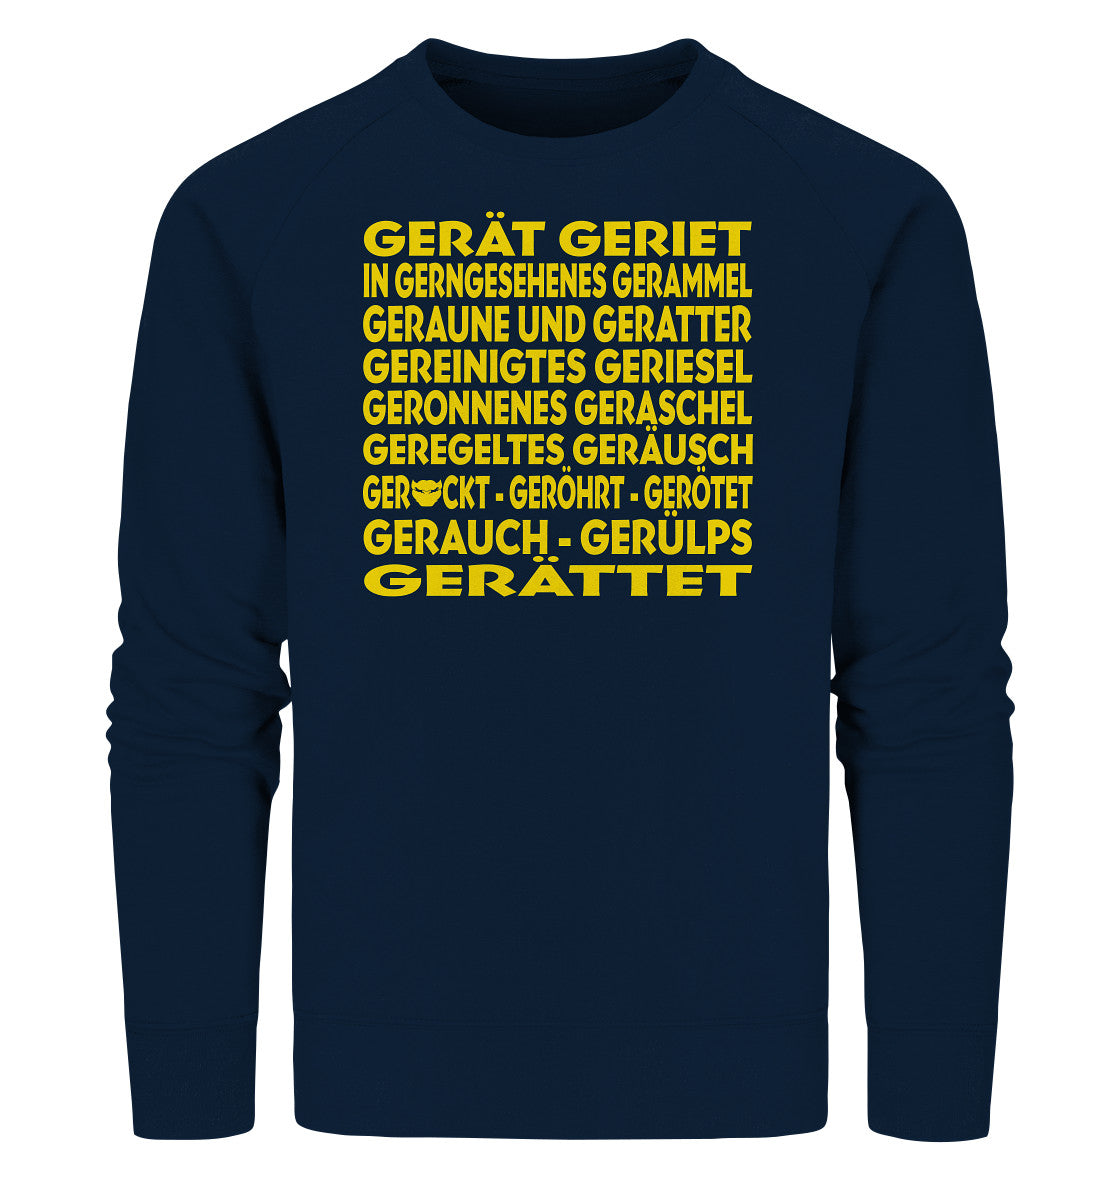 GERÄTTET - Organic Sweatshirt